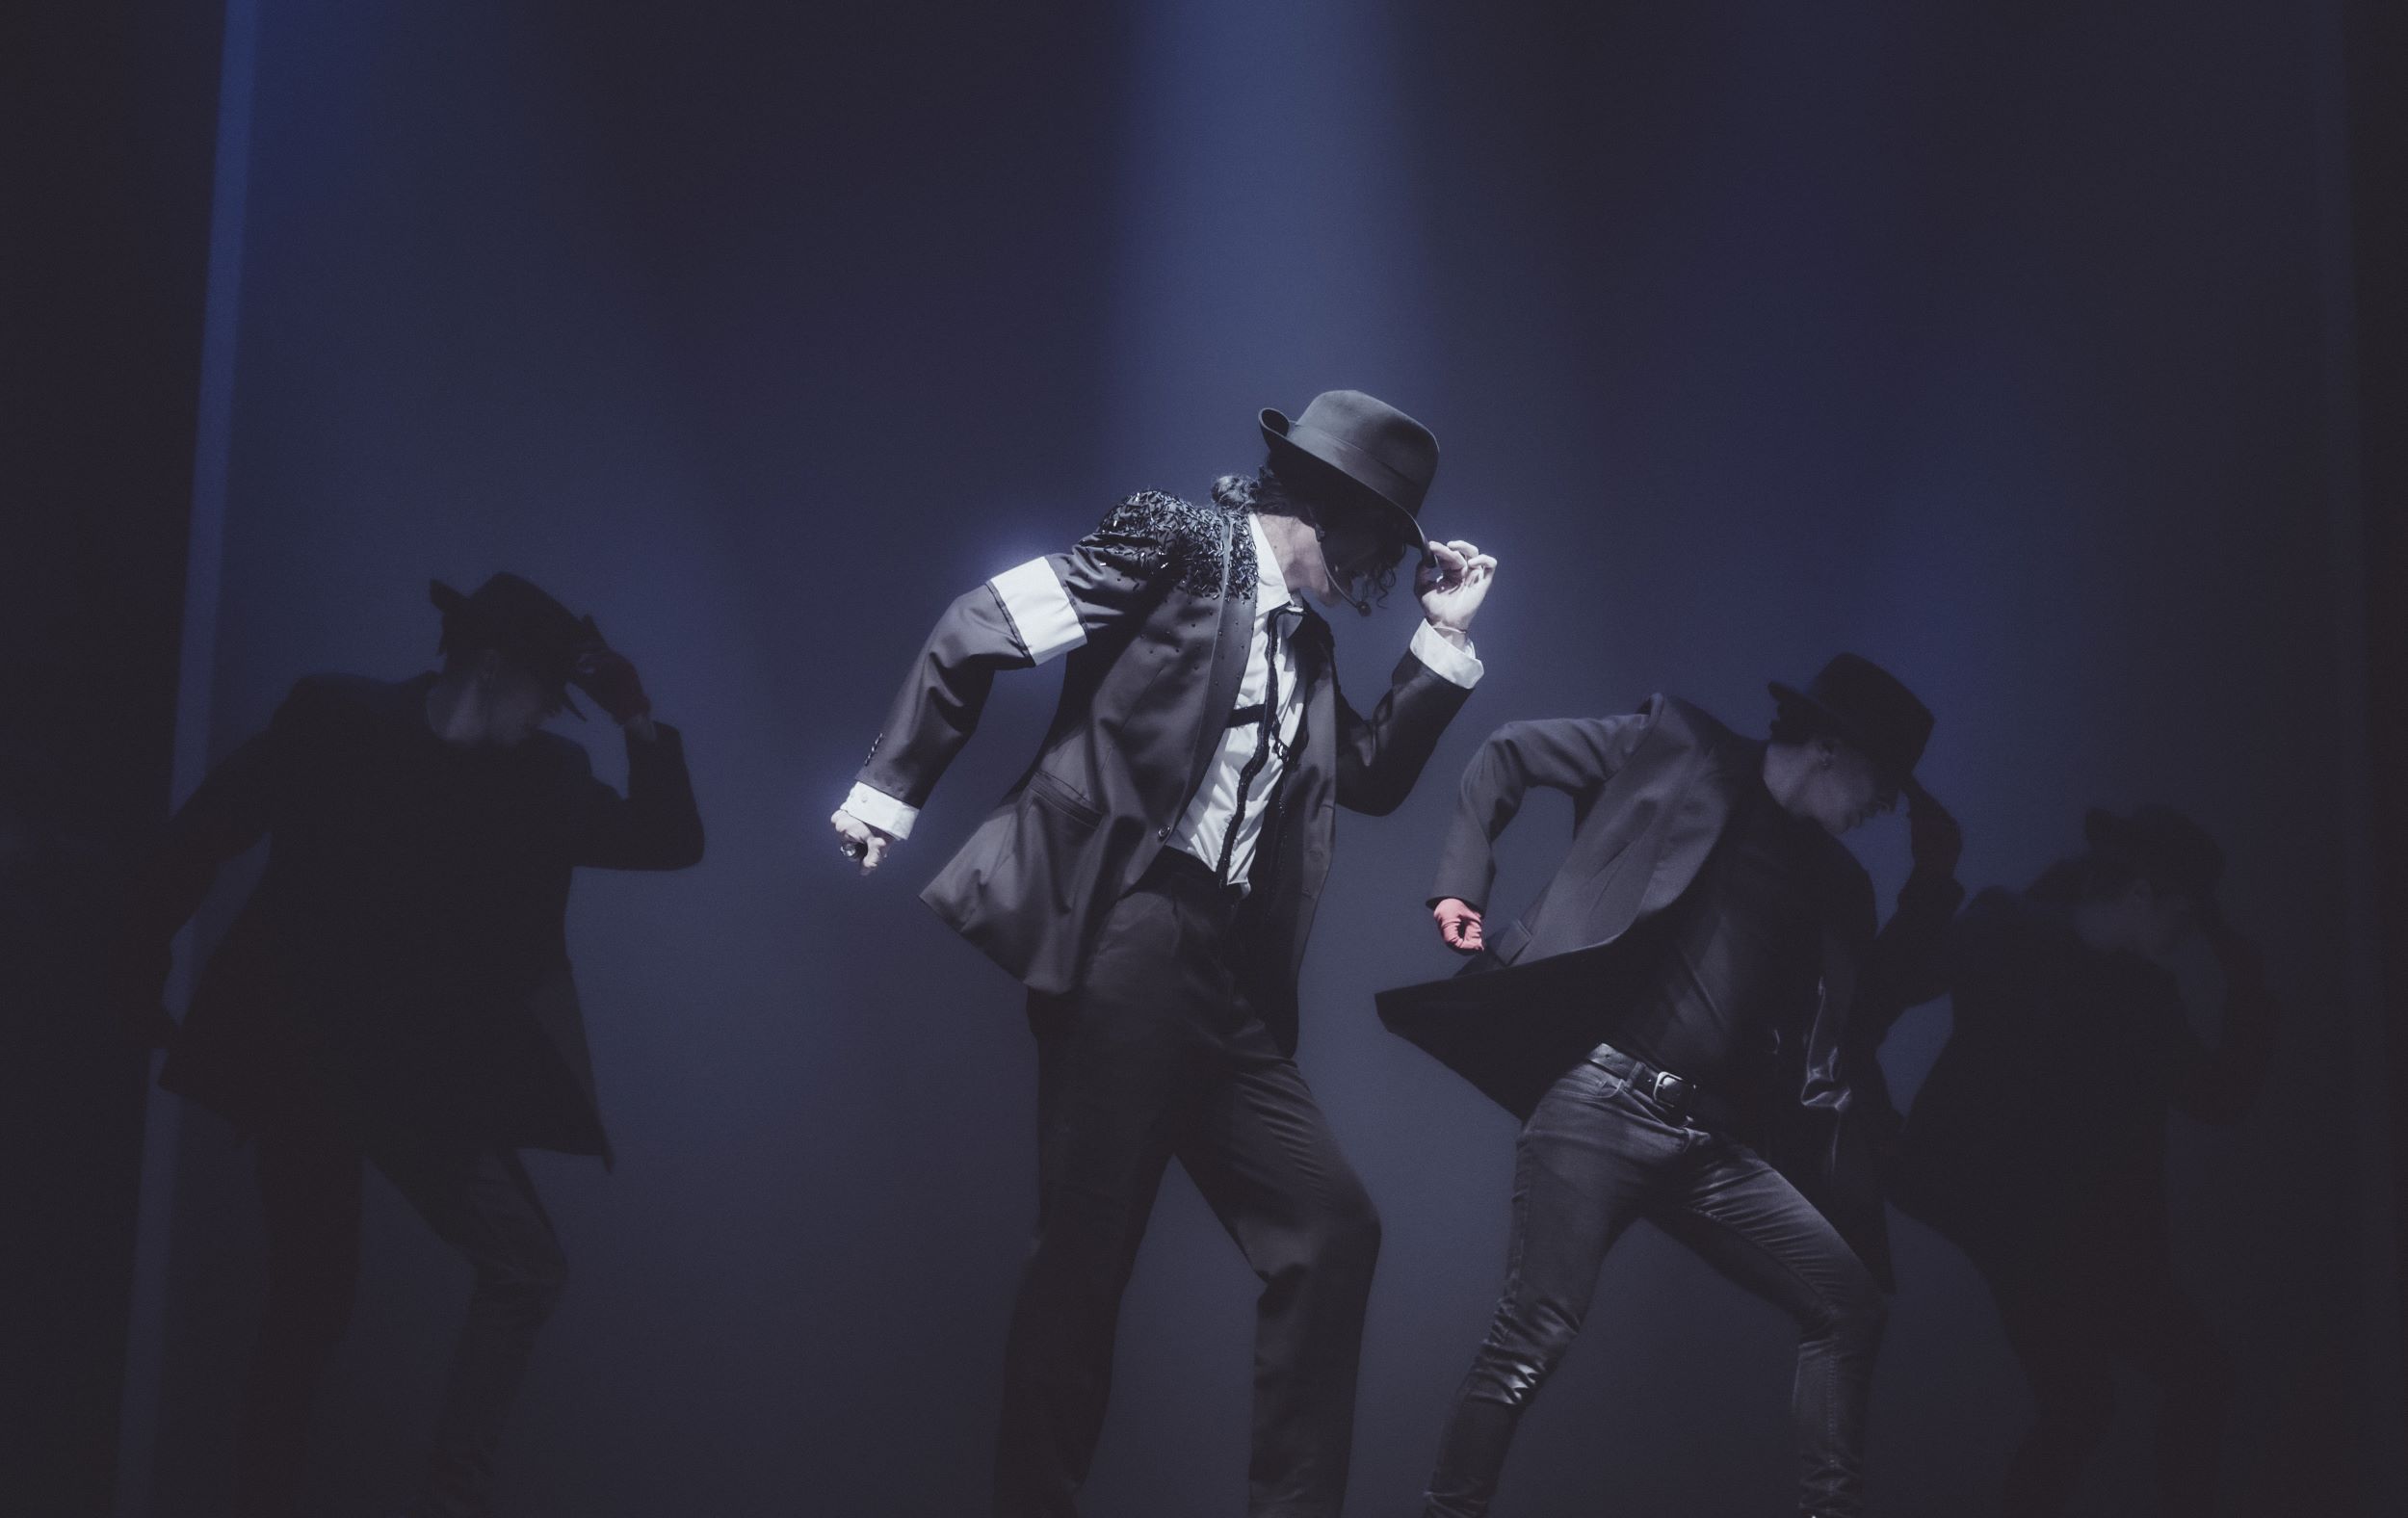 picture DANCING MACHINE Michael Jackson Tribute